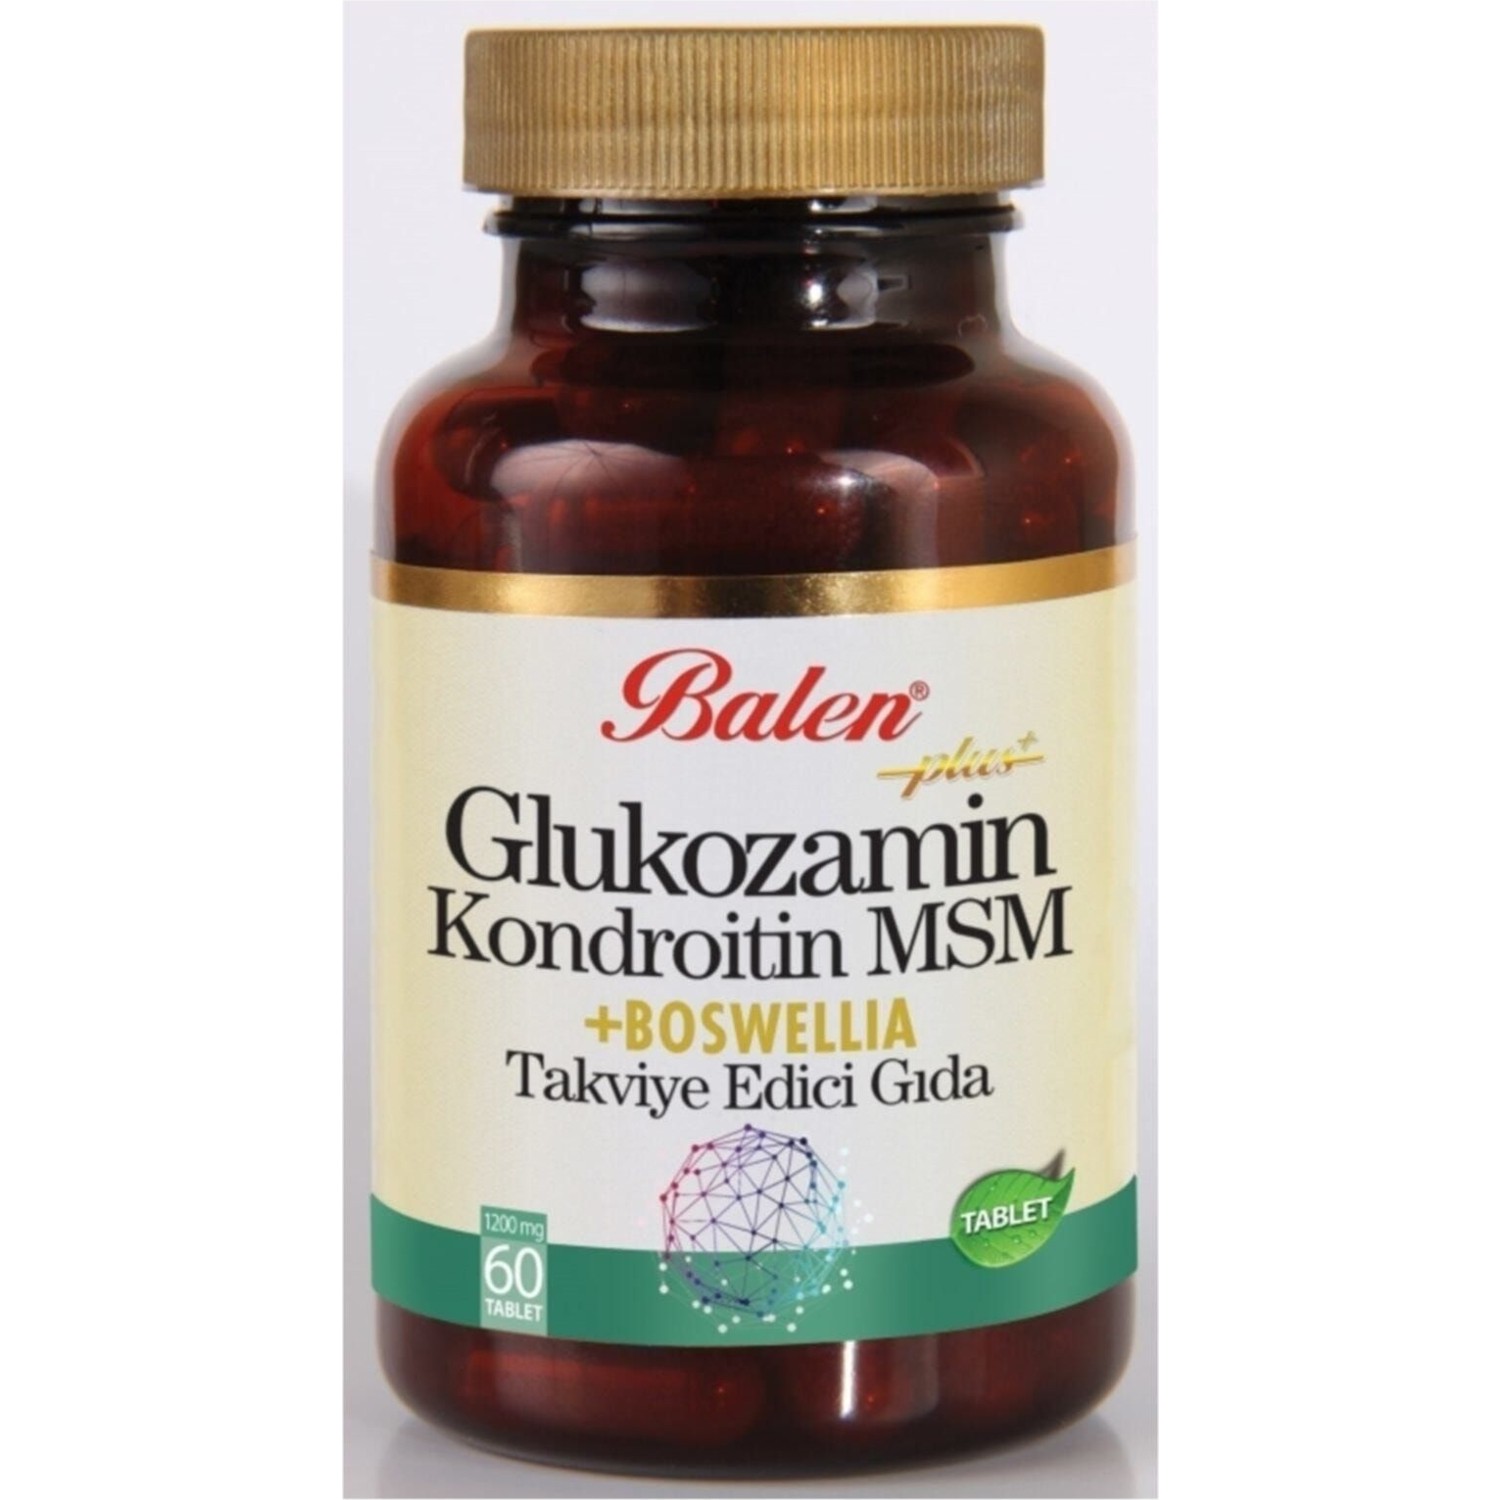 Активная добавка глюкозамин Balen Chondroitin Msm и Boswellia, 60 капсул, 1200 мг активная добавка глюкозамин balen chondroitin msm 120 капсул 850 мг 3 штуки